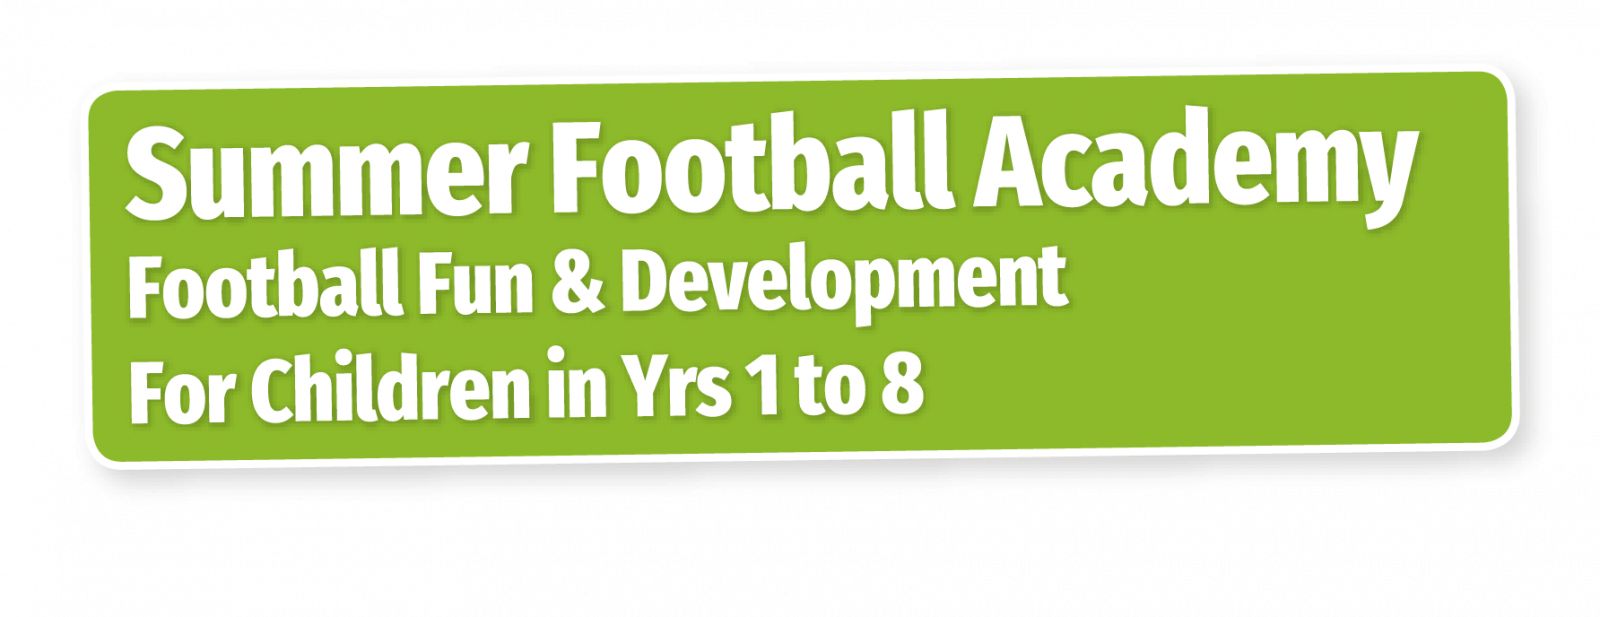 KOOSA Kids Summer Football Academy, Football Fun & Development for Children in Years 1 to 8